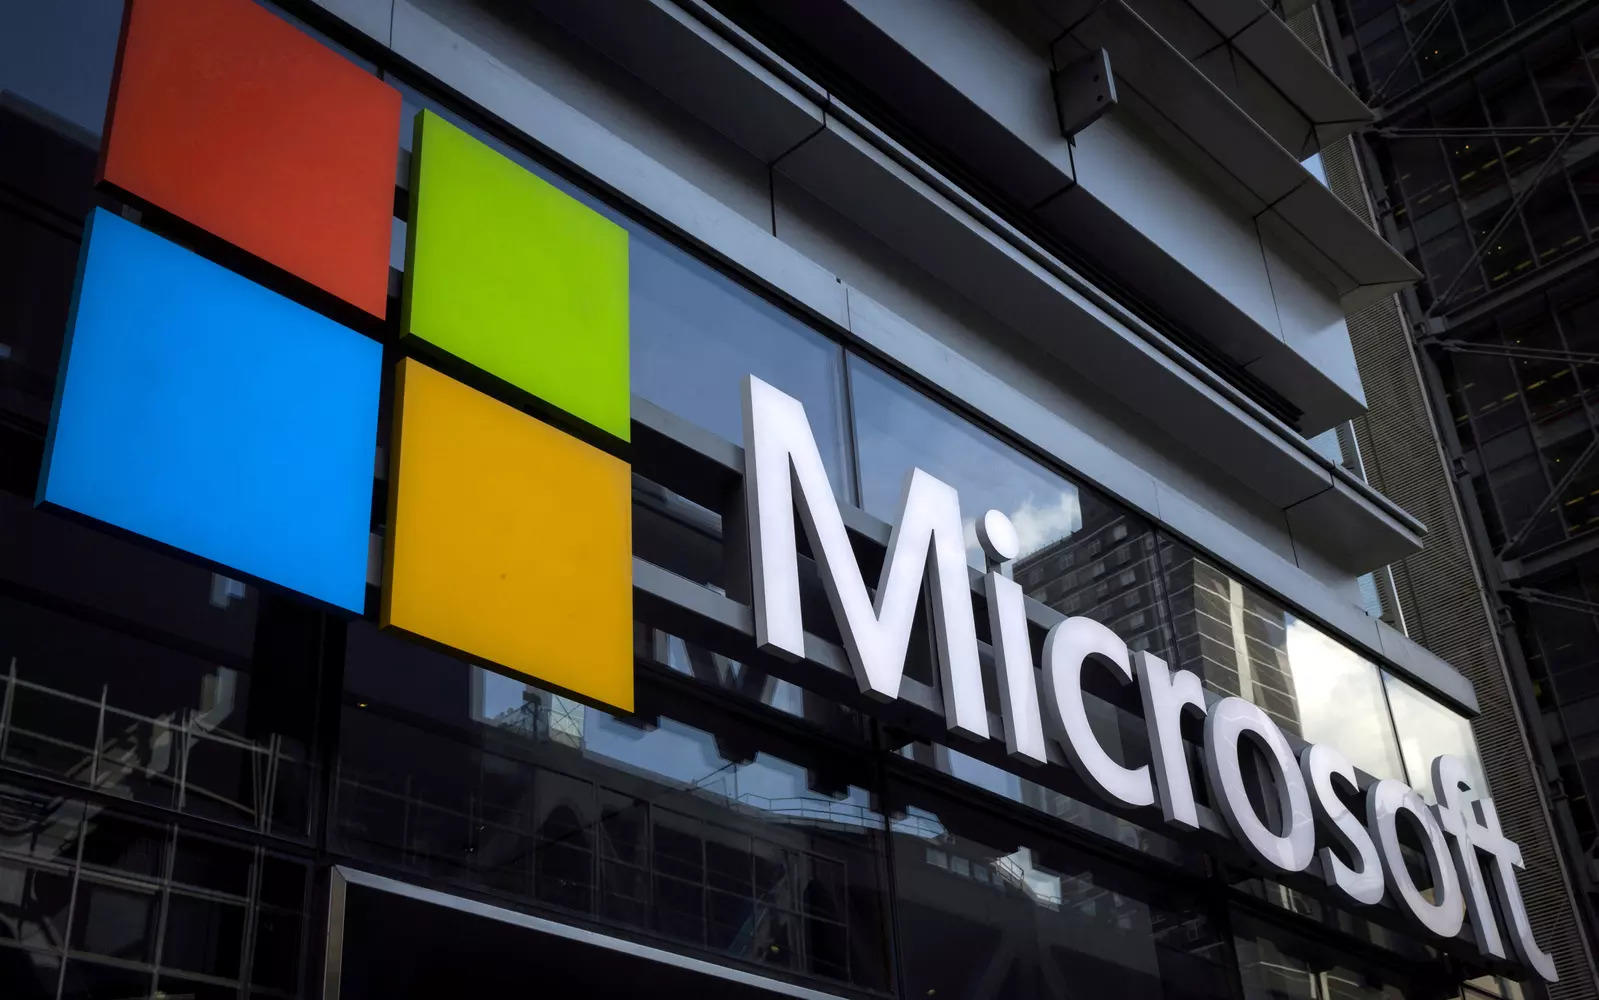 Microsoft's developer event 'Build' goes virtual again